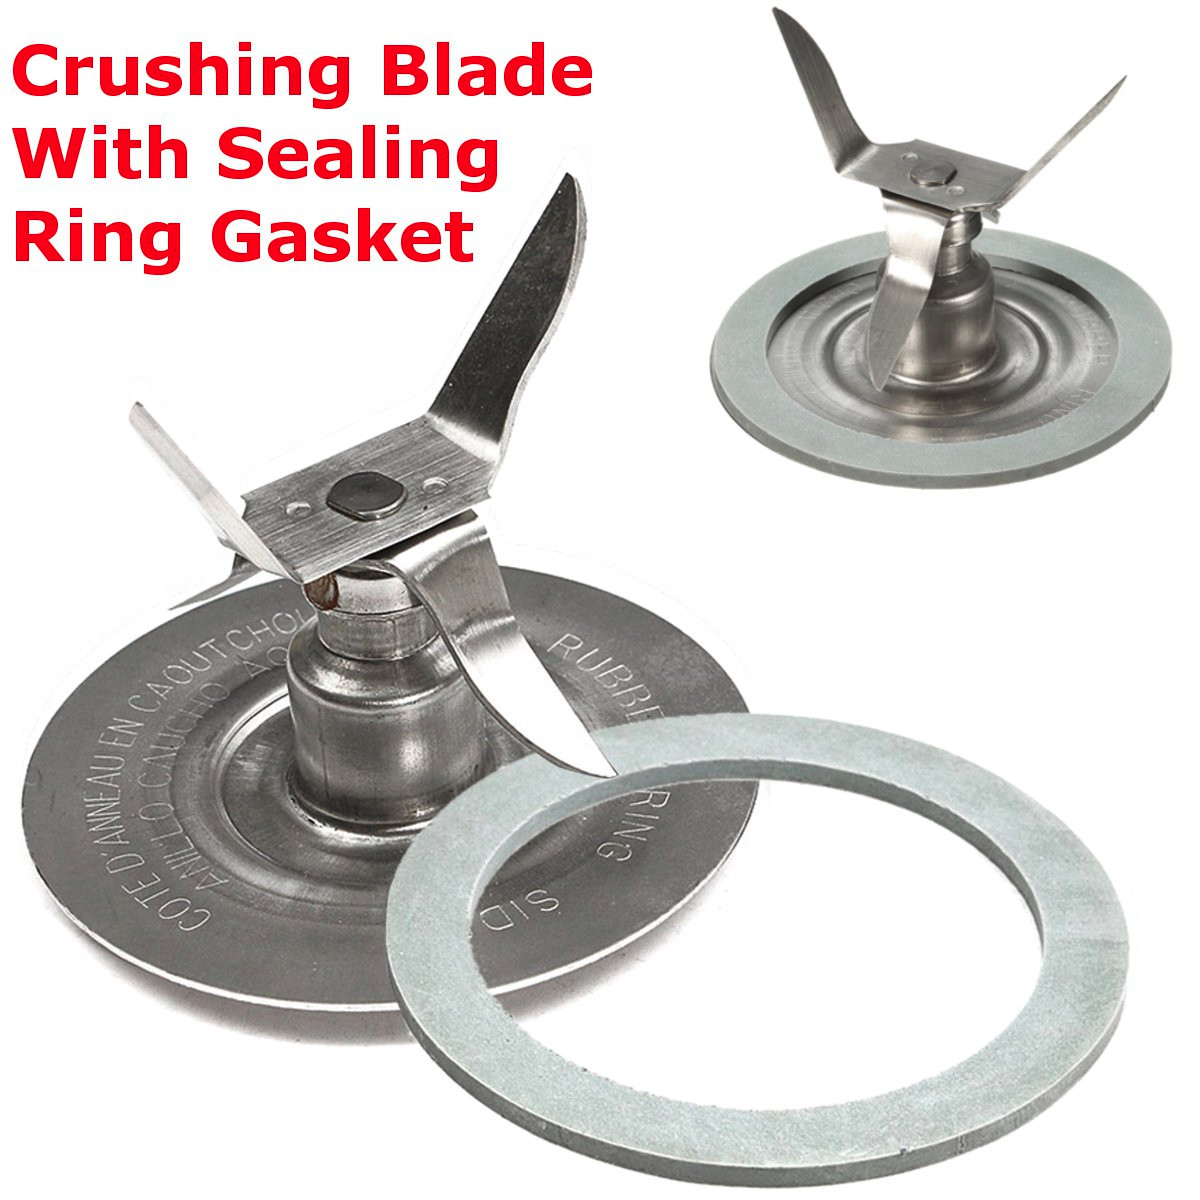 Ice-Crushing-Stainless-Steel-Blade-Sealing-Ring-Gasket-For-Oster-Blender-1301761